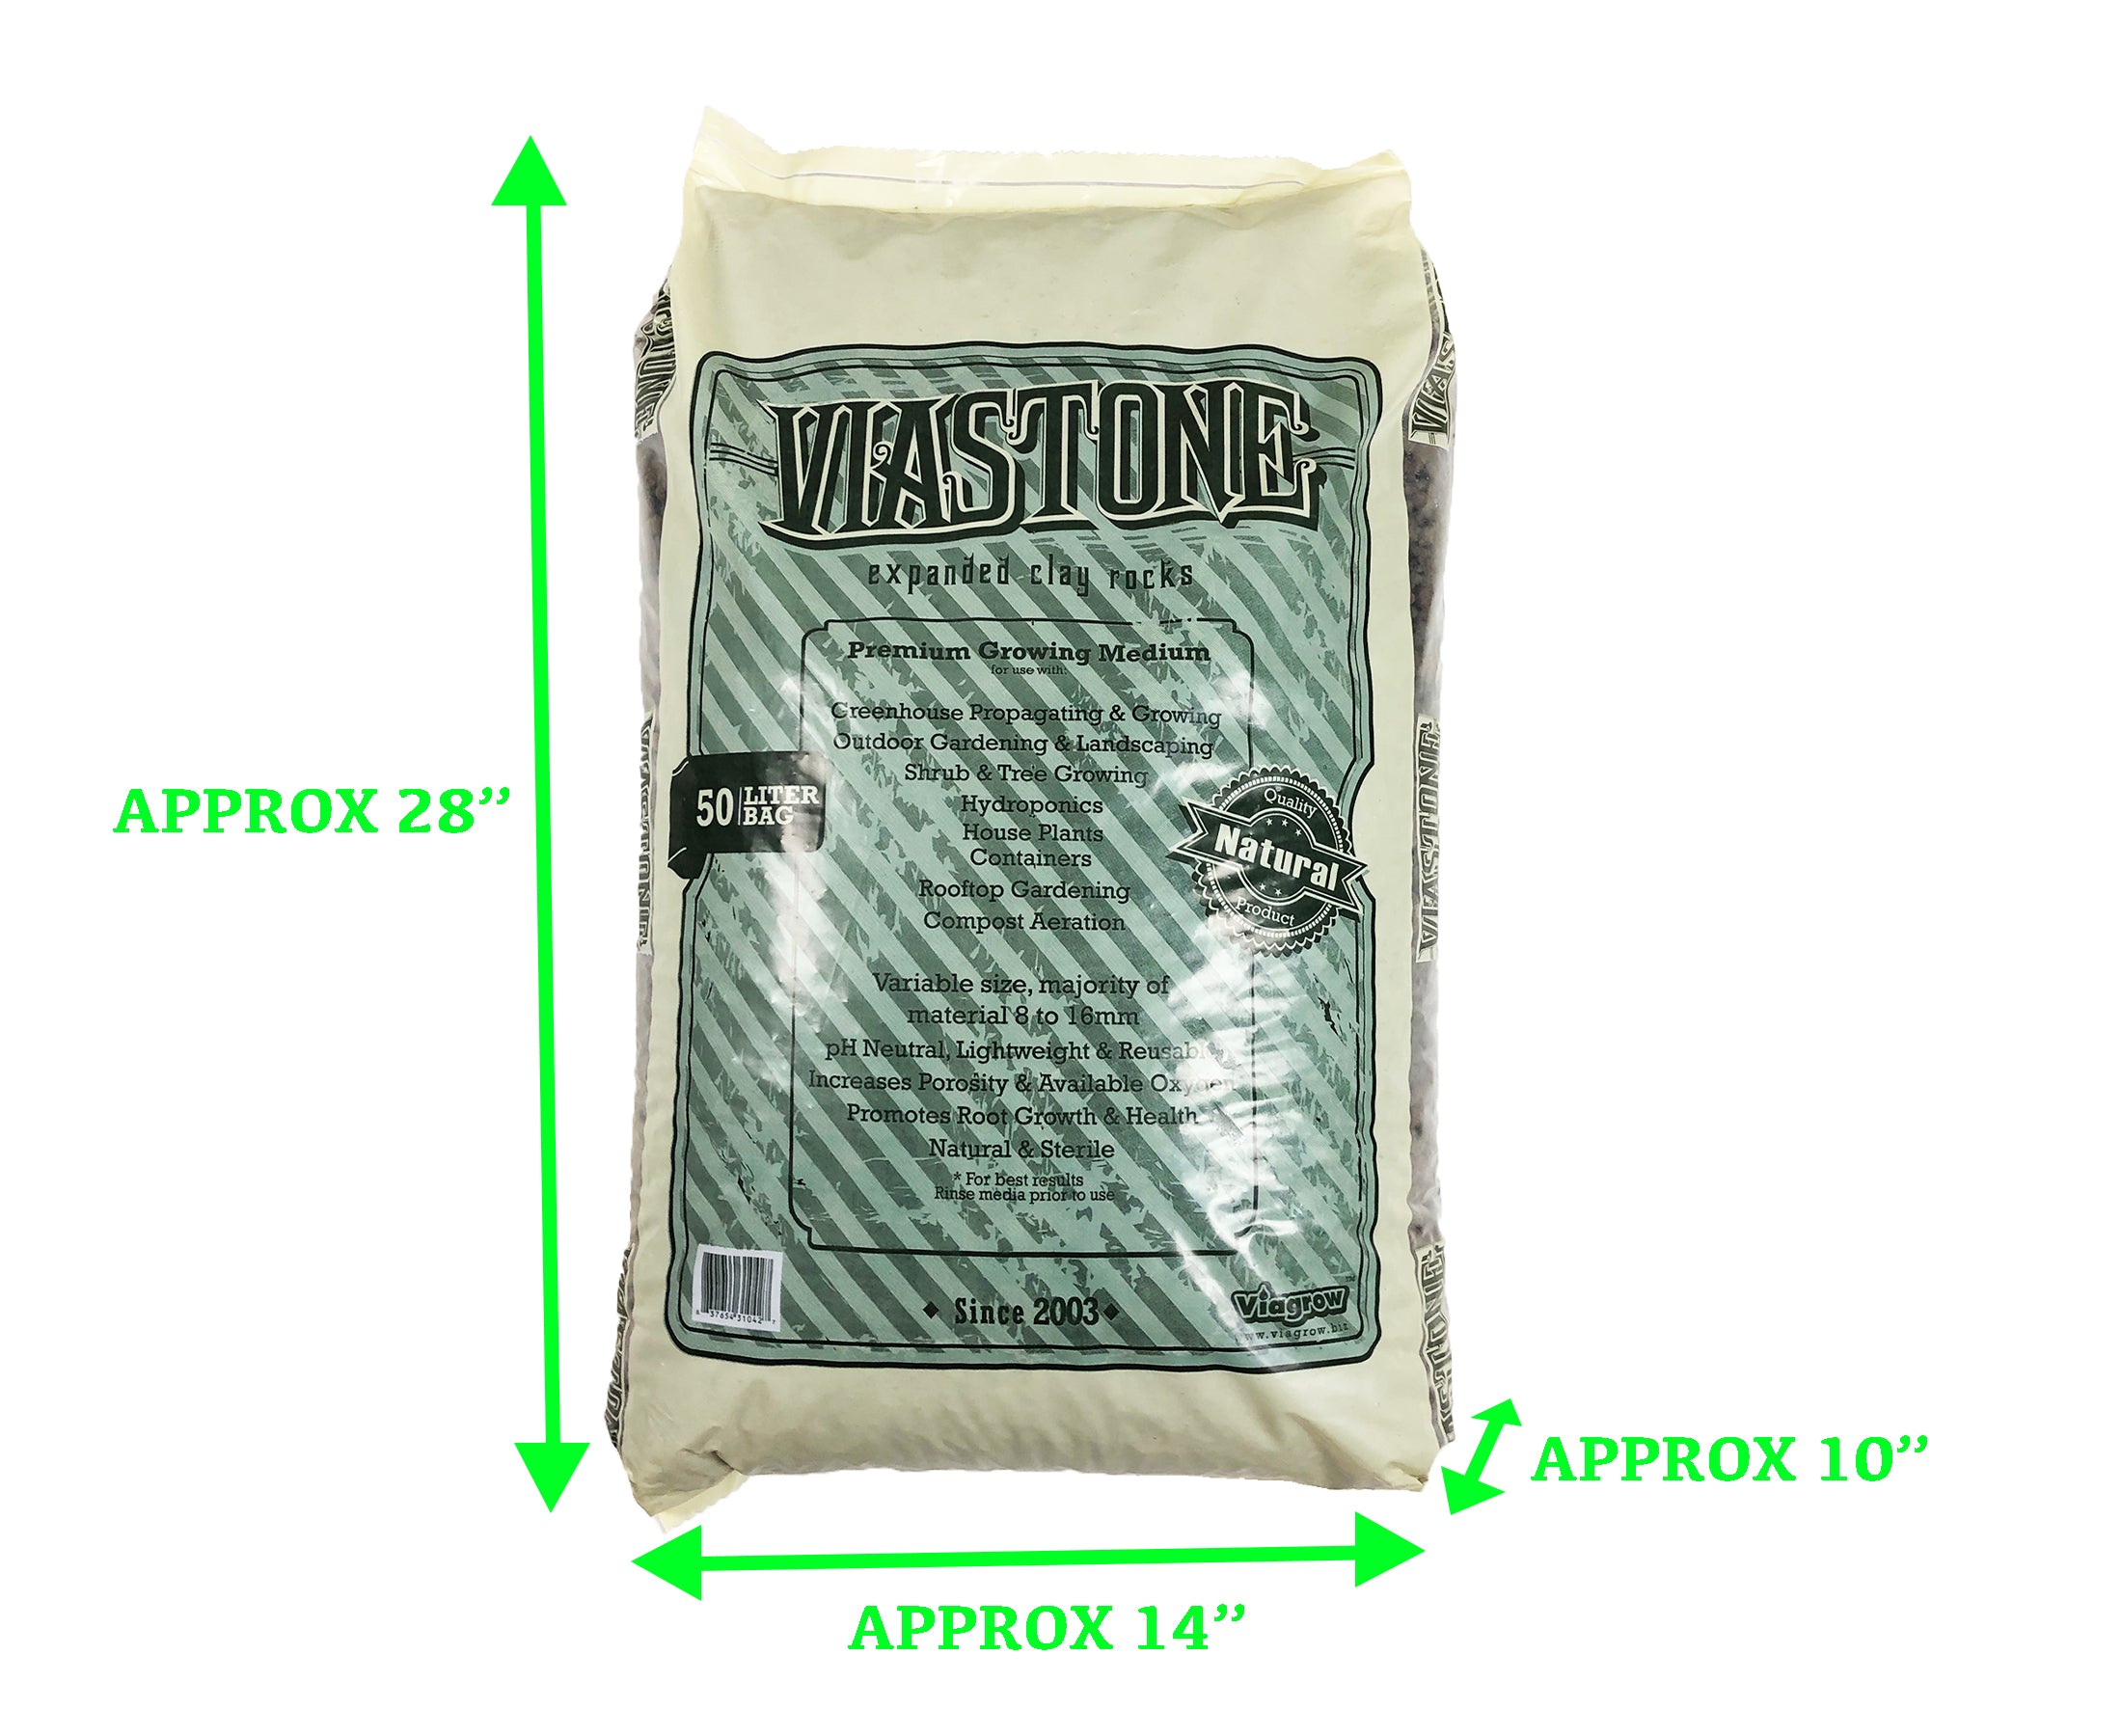 Viagrow 1.76 cu. ft. ViaStone Hydroponic Gardening Medium Grow Rock (50 Bag Pallet)